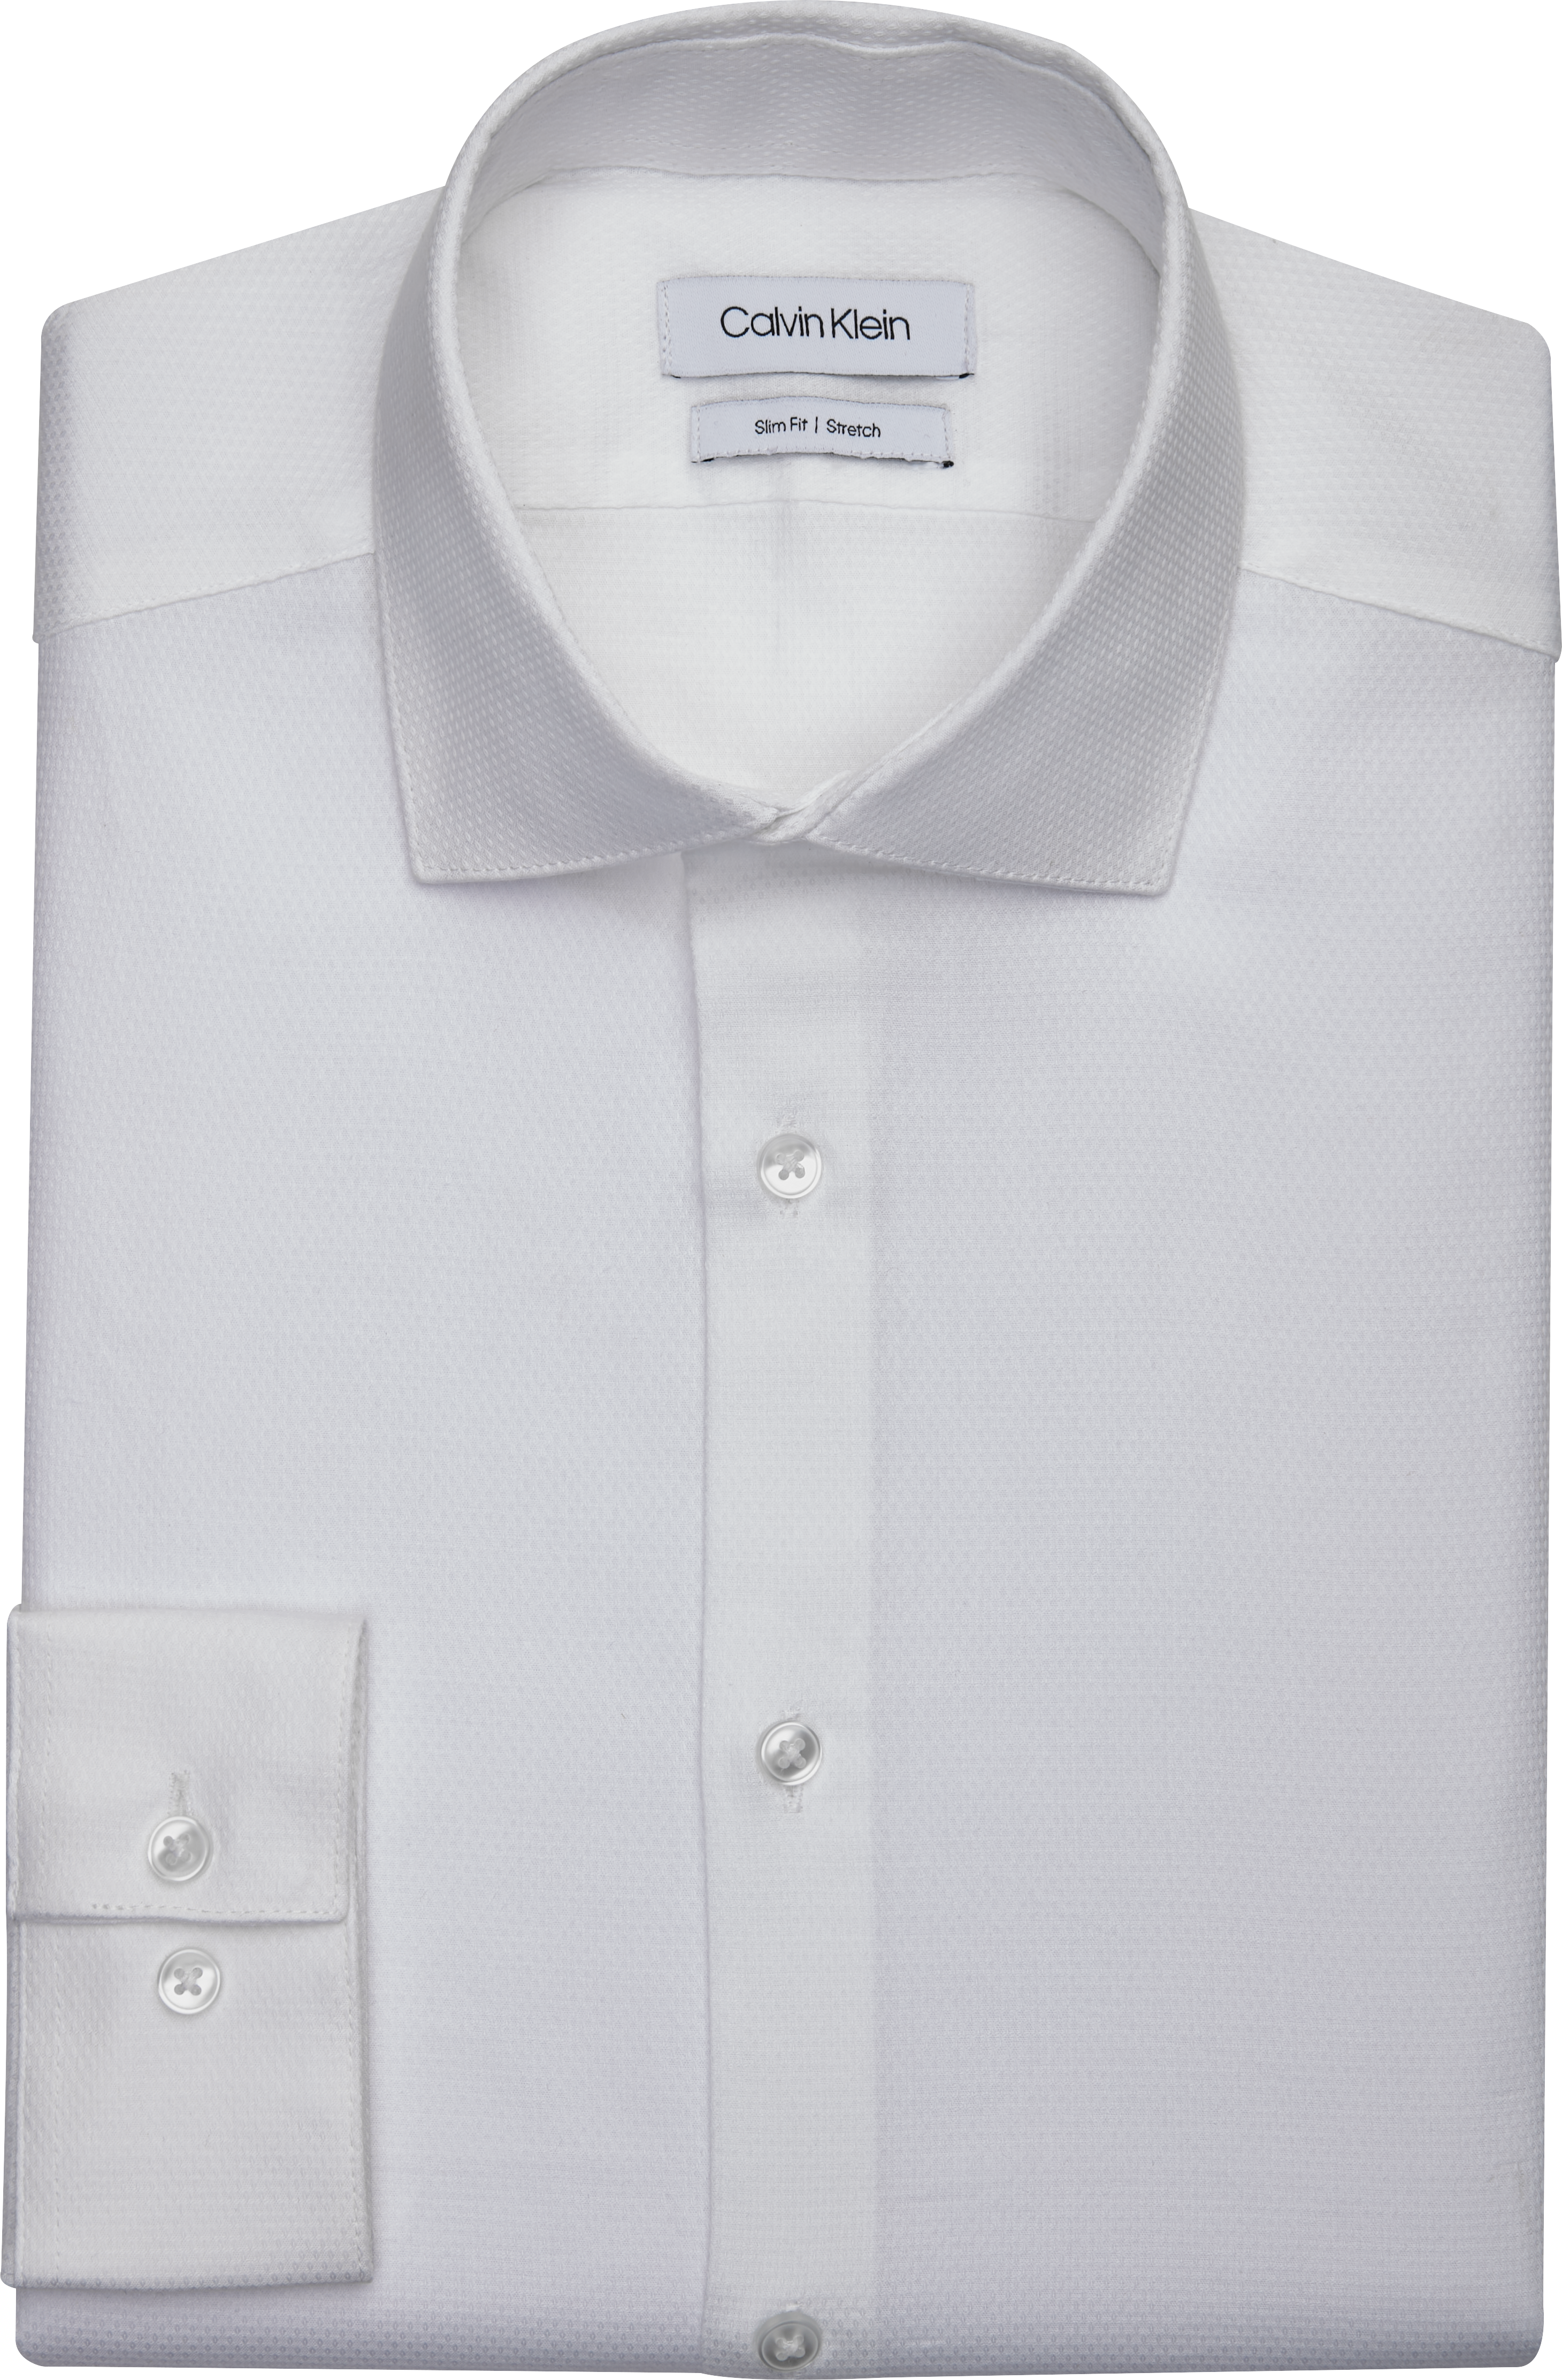 Nucleair Migratie room Calvin Klein Slim Fit Dobby Weave Dress Shirt, White - Men's Featured |  Men's Wearhouse